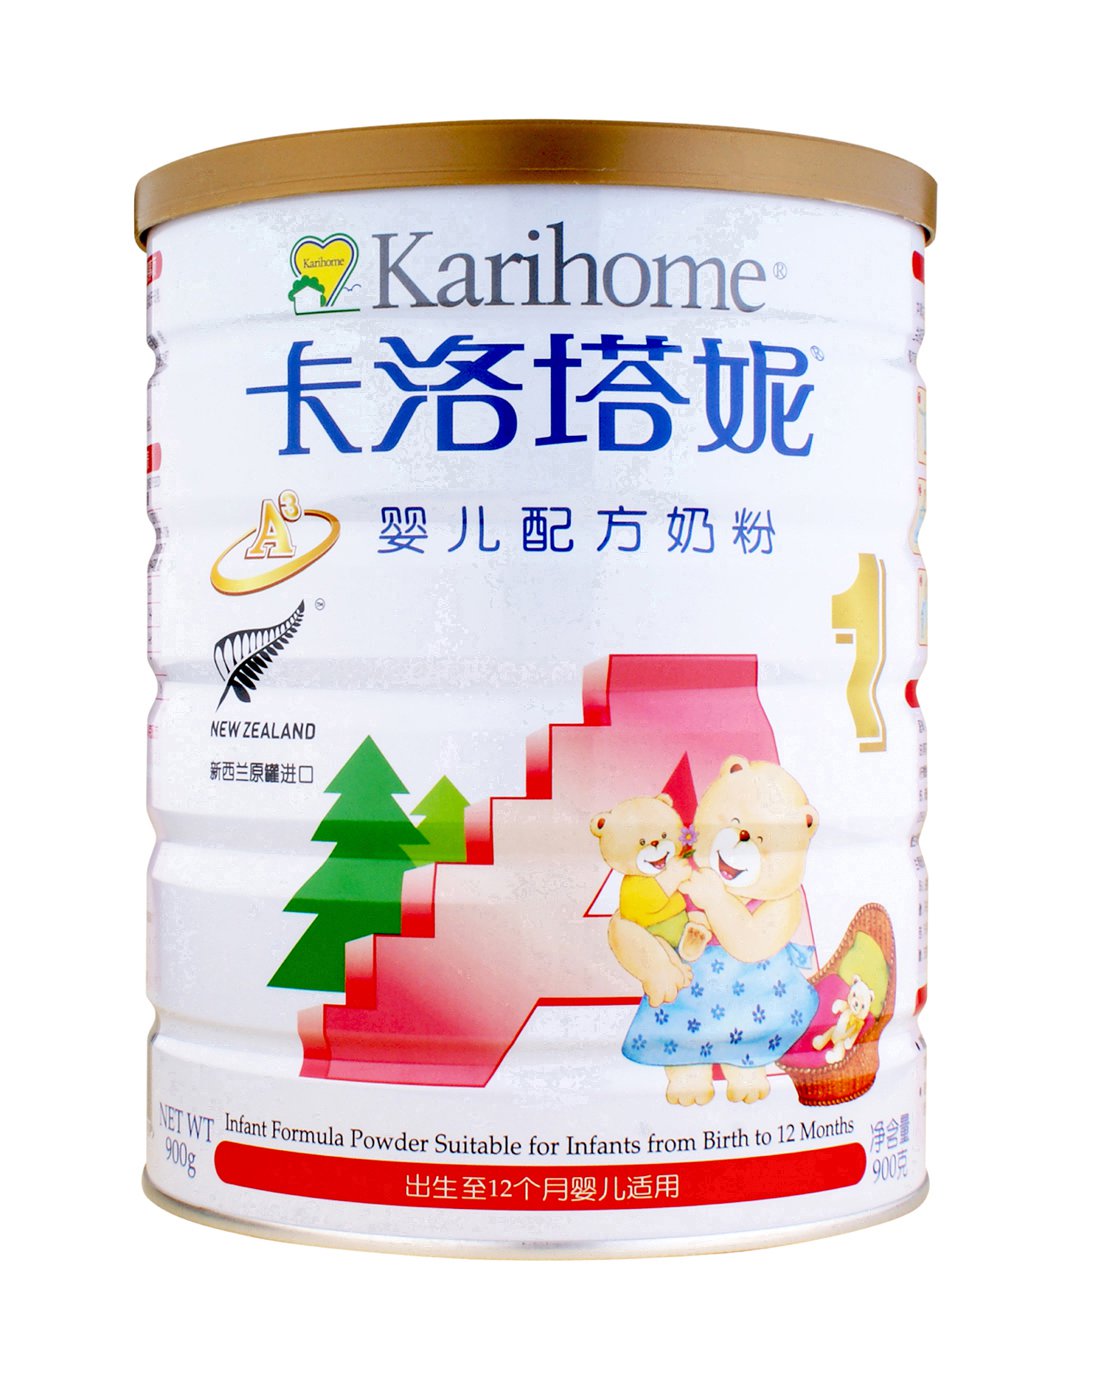 karihome 卡洛塔妮 婴儿配方奶粉 1段0